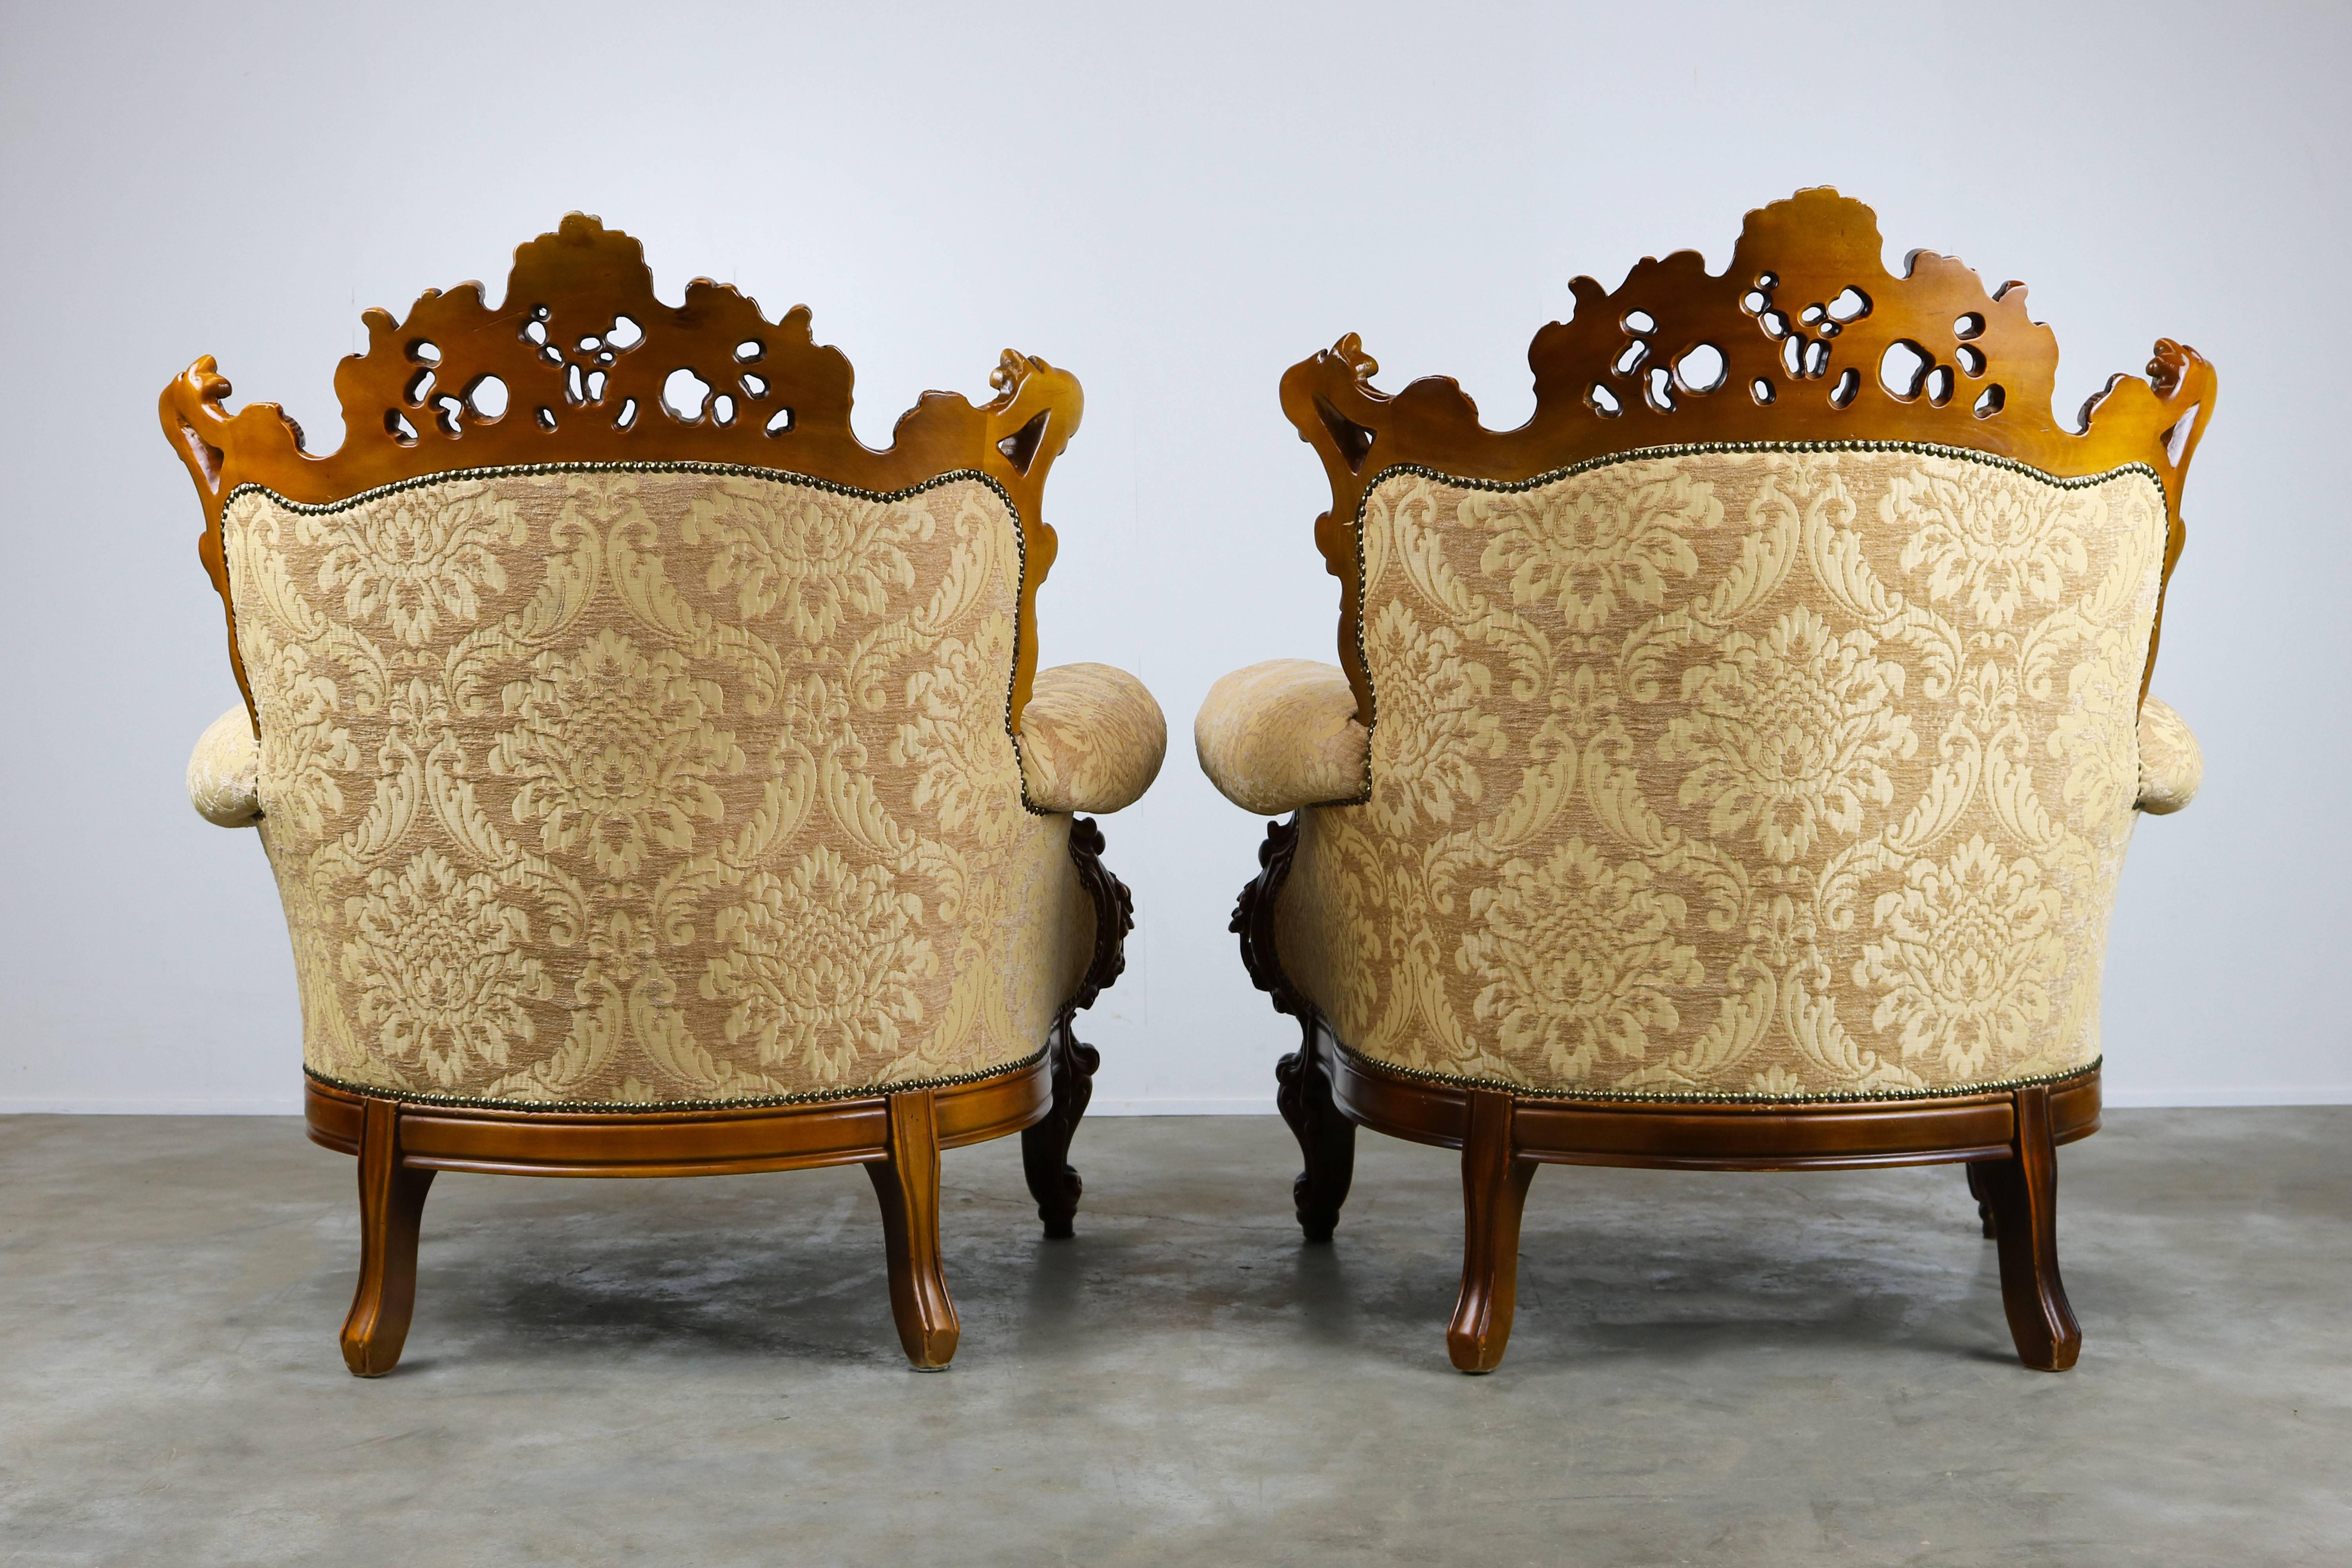 Tissu Luxueuses chaises longues italiennes anciennes en marron beige de style rococo/baroque en vente